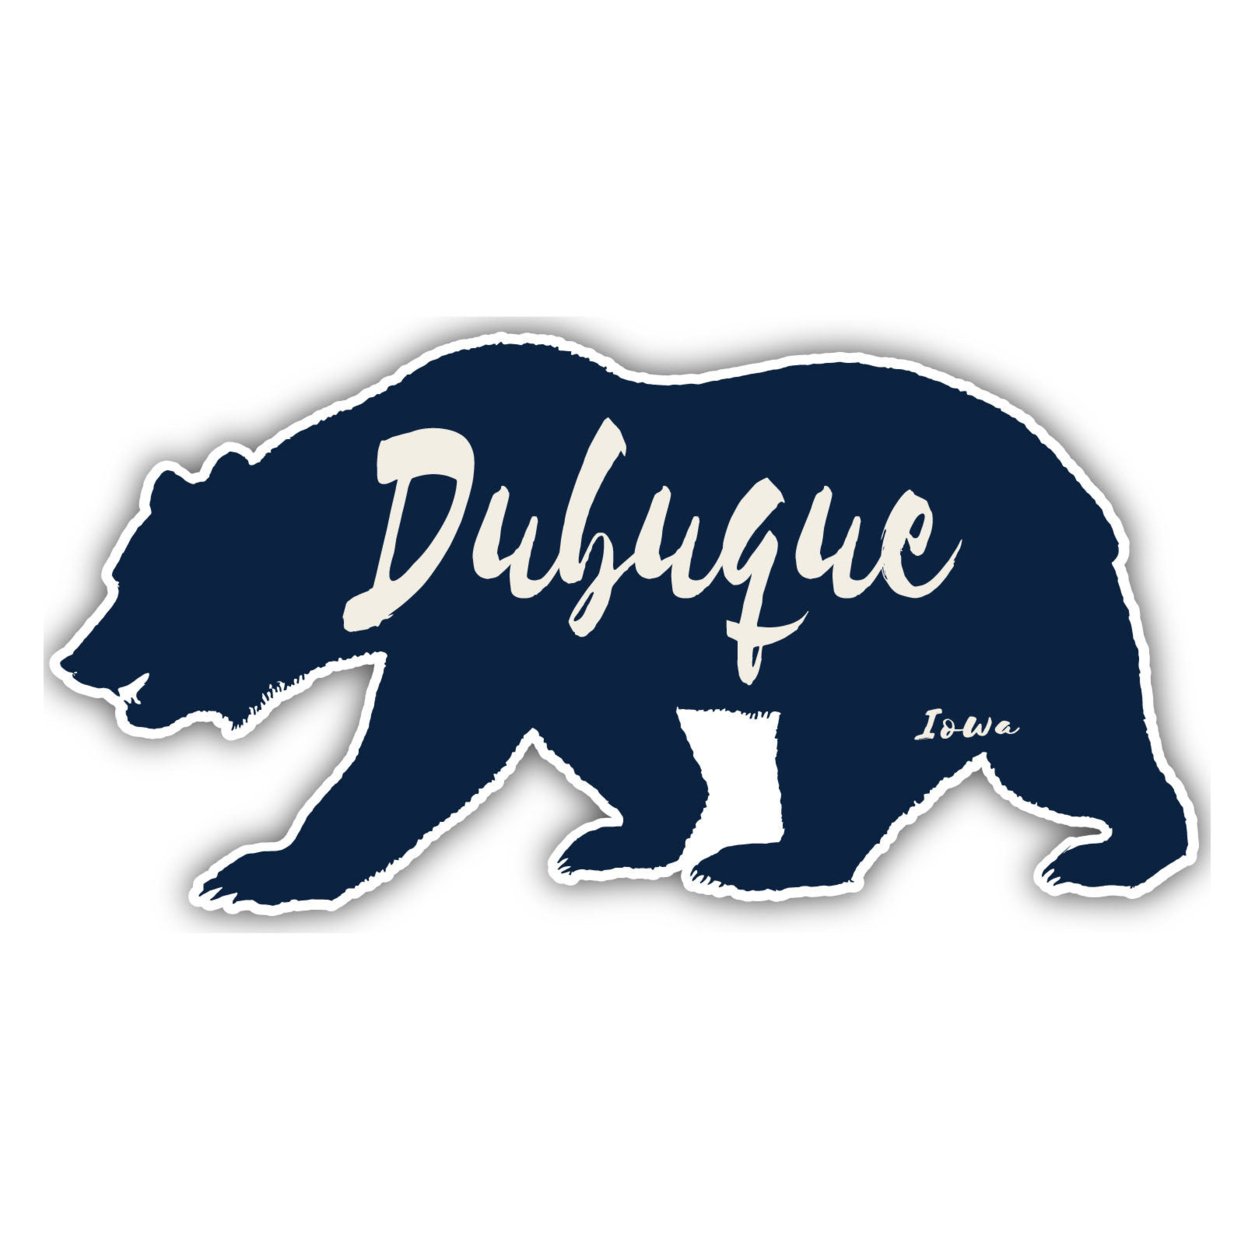 Dubuque Iowa Souvenir Decorative Stickers (Choose Theme And Size) - 4-Pack, 8-Inch, Bear